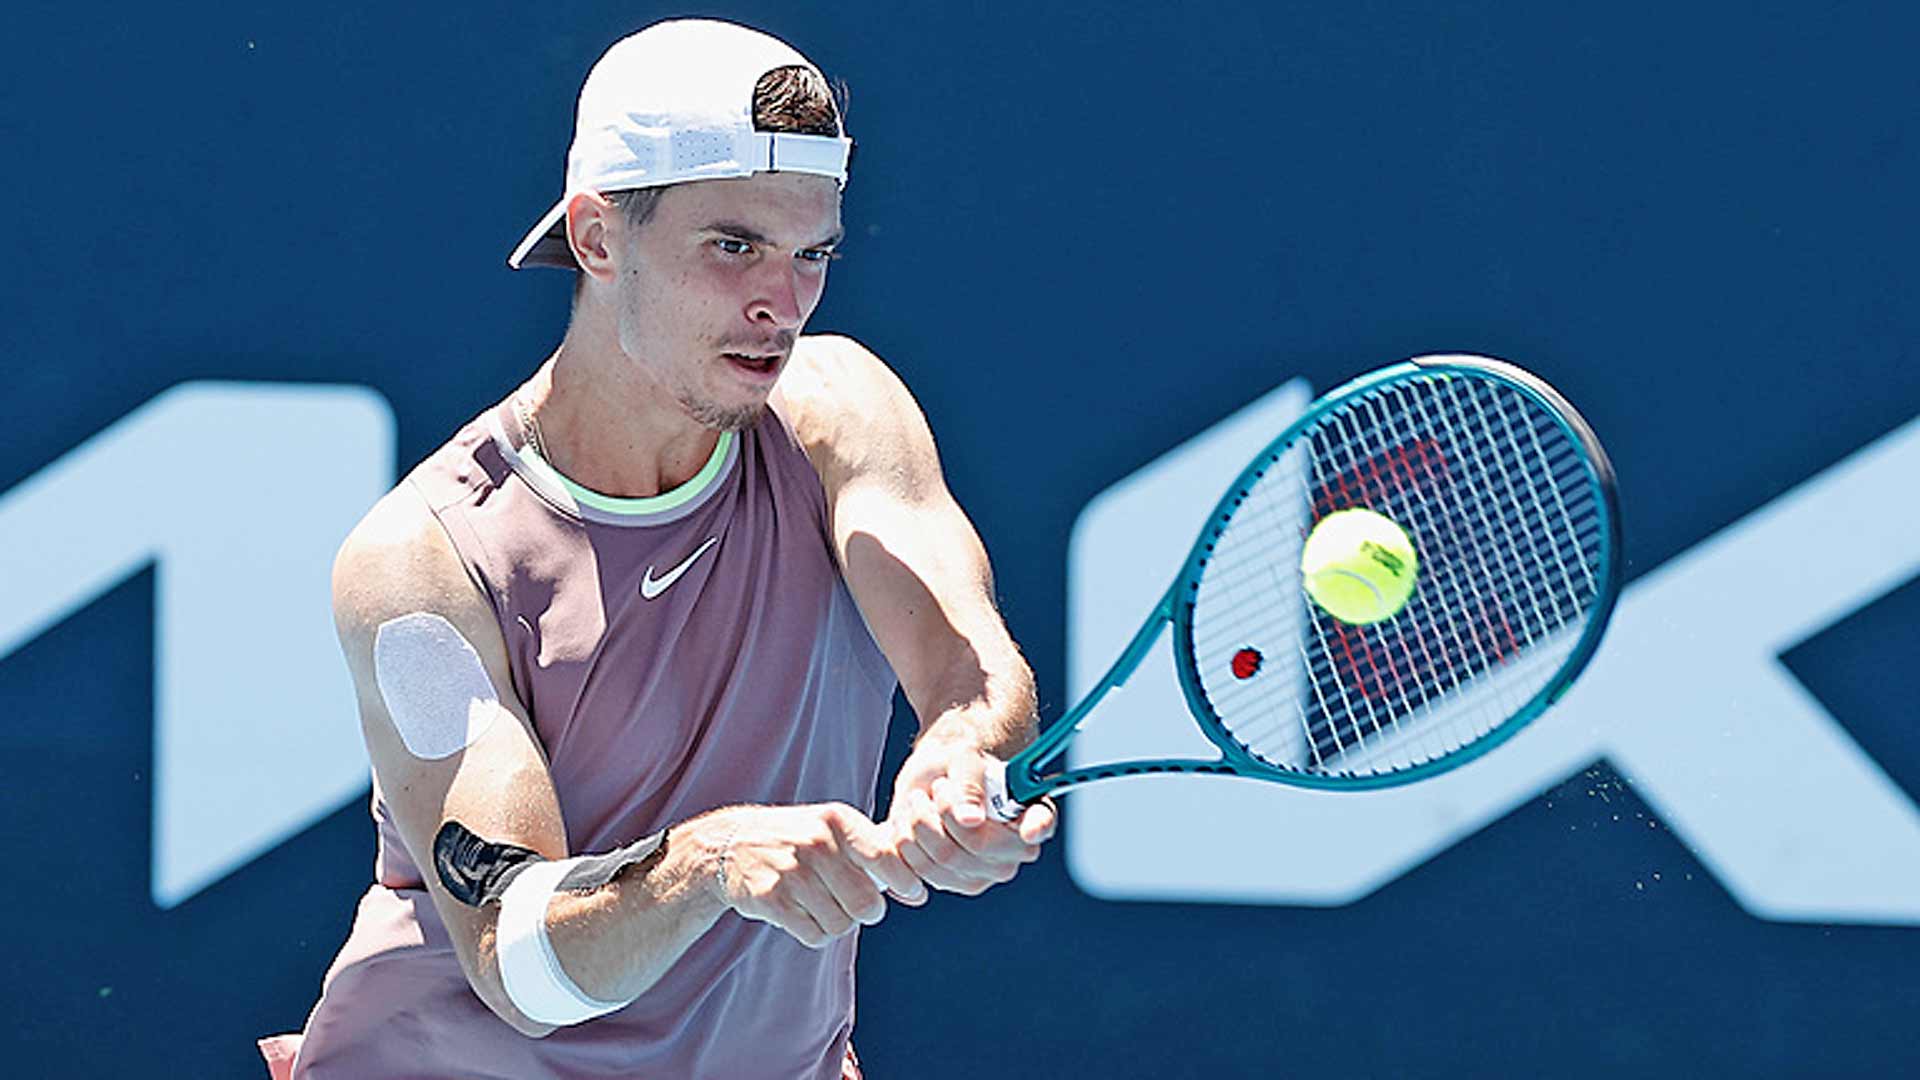 Dino Prizmic, Jakub Mensik reach final round of Australian Open qualifying  | ATP Tour | Tennis